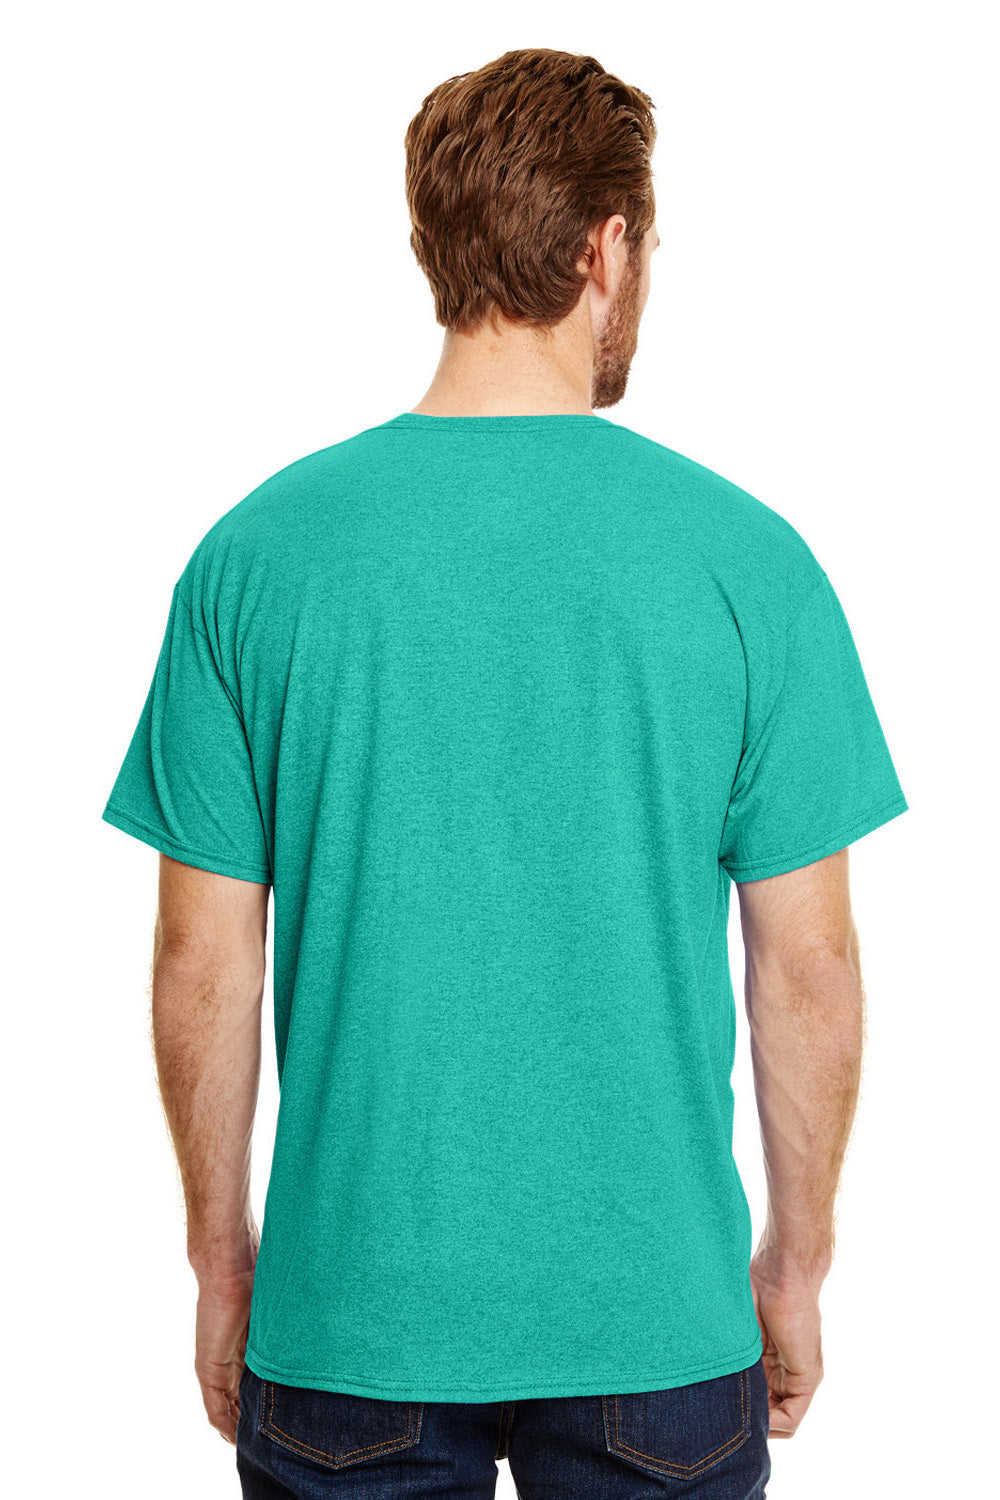 Hanes 42TB Mens X-Temp FreshIQ Moisture Wicking Short Sleeve Crewneck T-Shirt Breezy Green Back